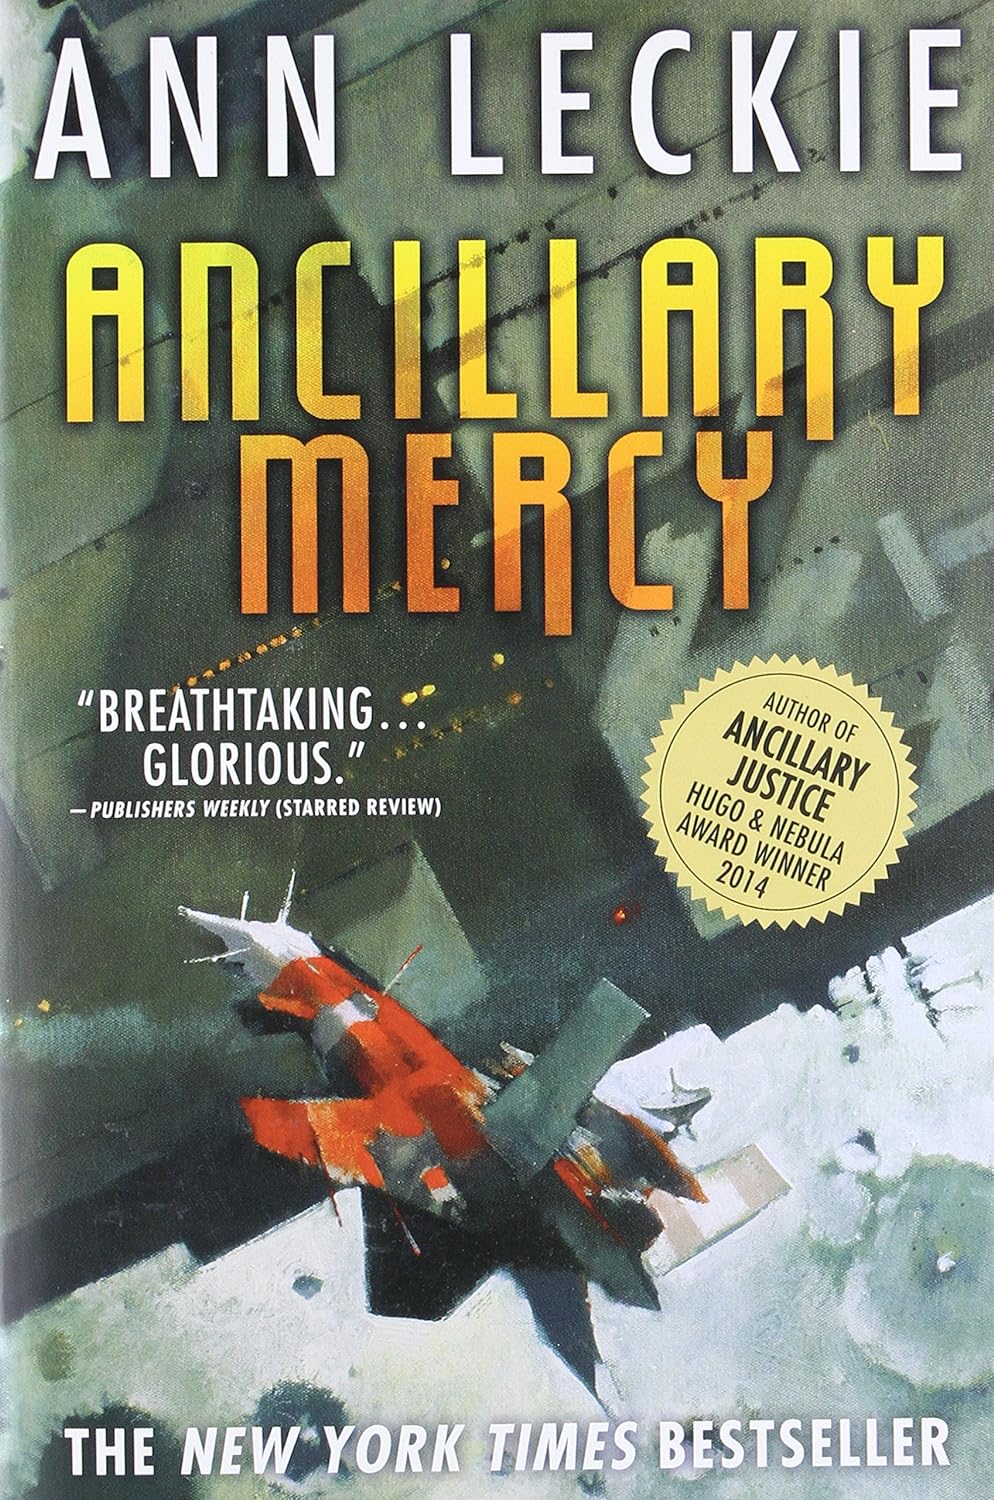 Ann Leckie: Ancillary Mercy (Paperback, 2015, Orbit)